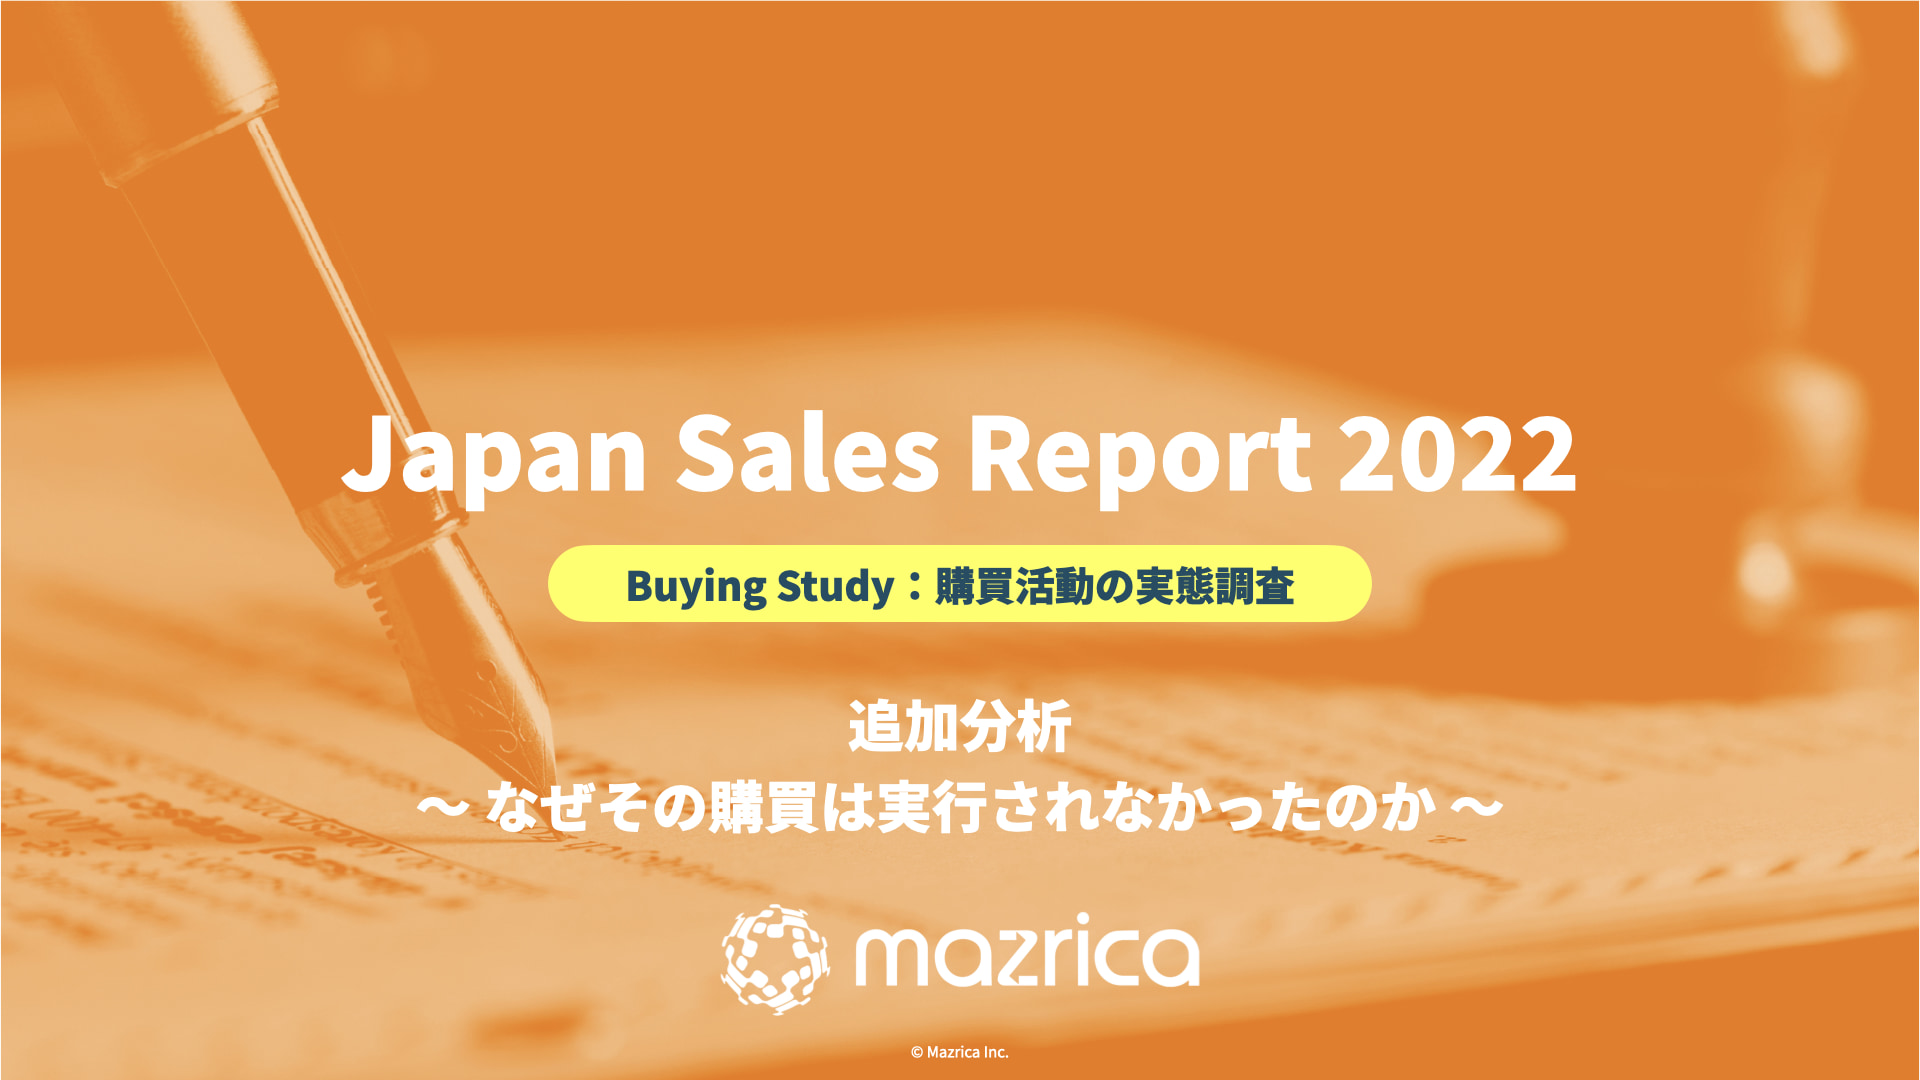 Japan Sales Report 2022 〜Buying Study追加分析：なぜその購買は実行されなかったのか〜